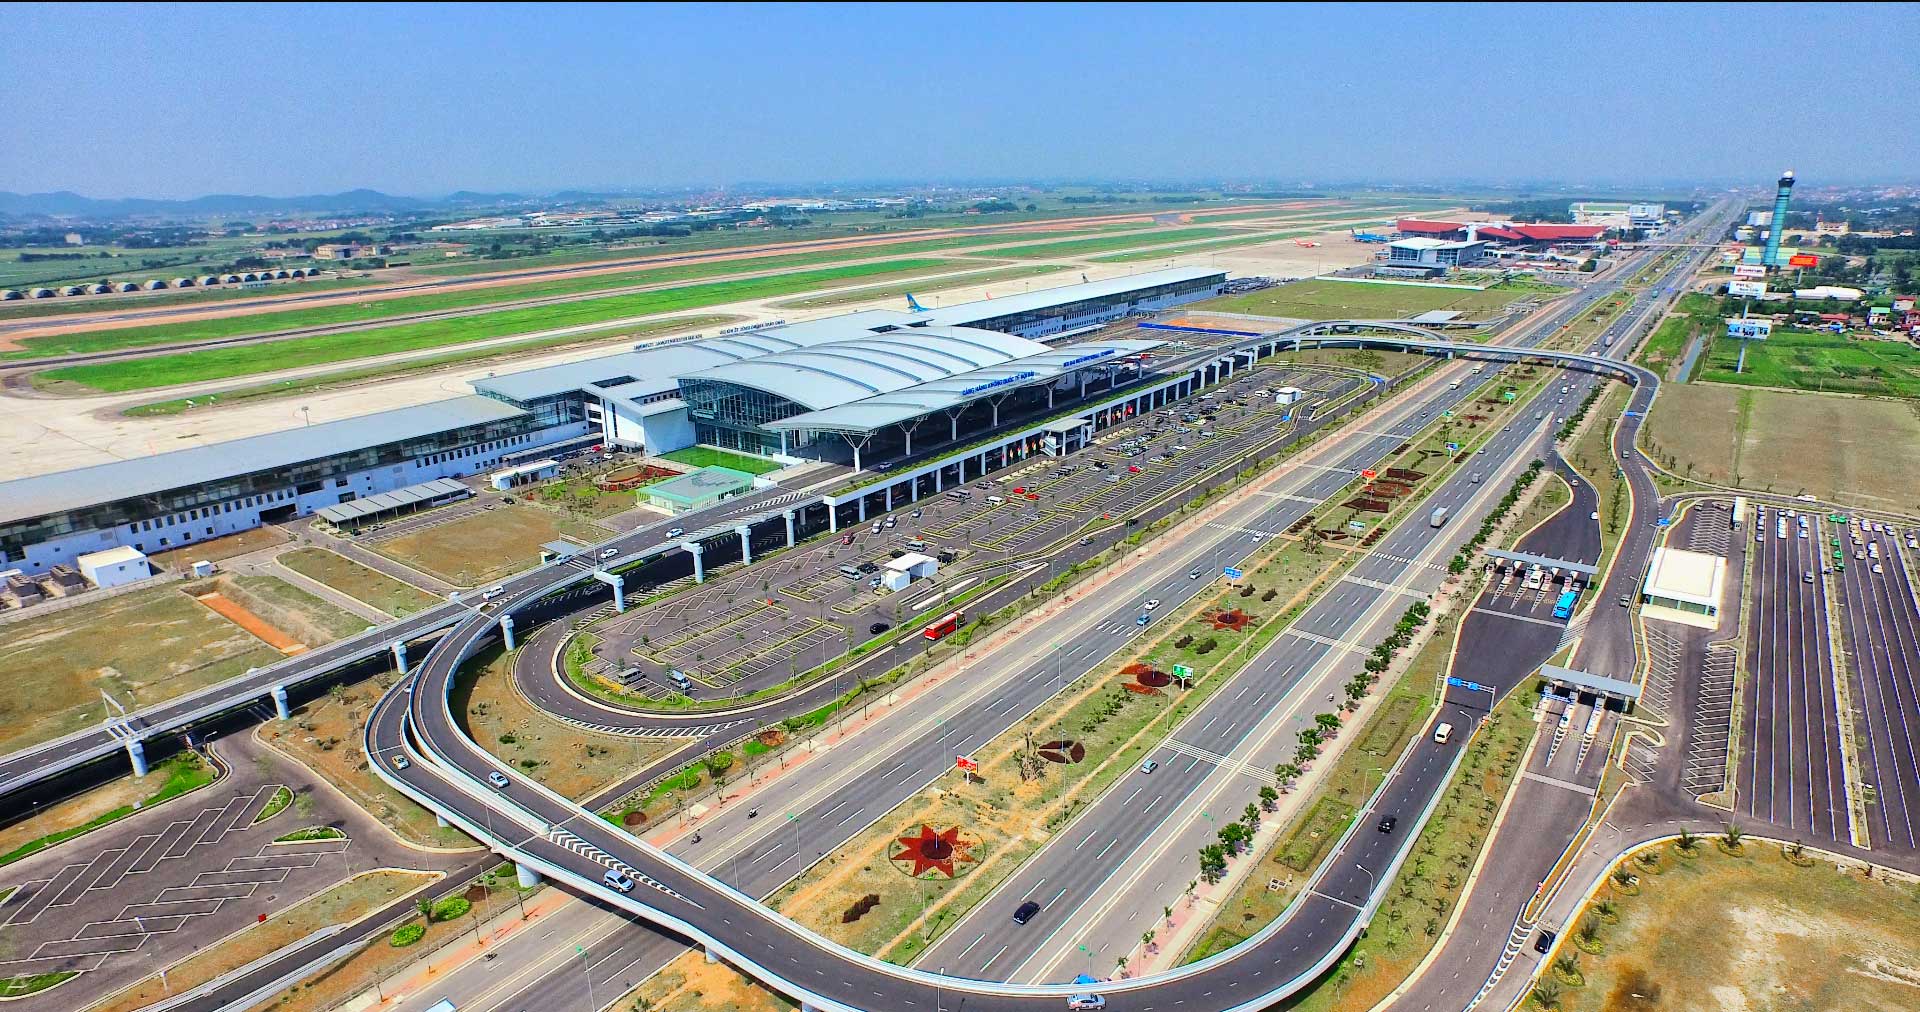 $219mn needed to upgrade international terminal at Hanoi airport